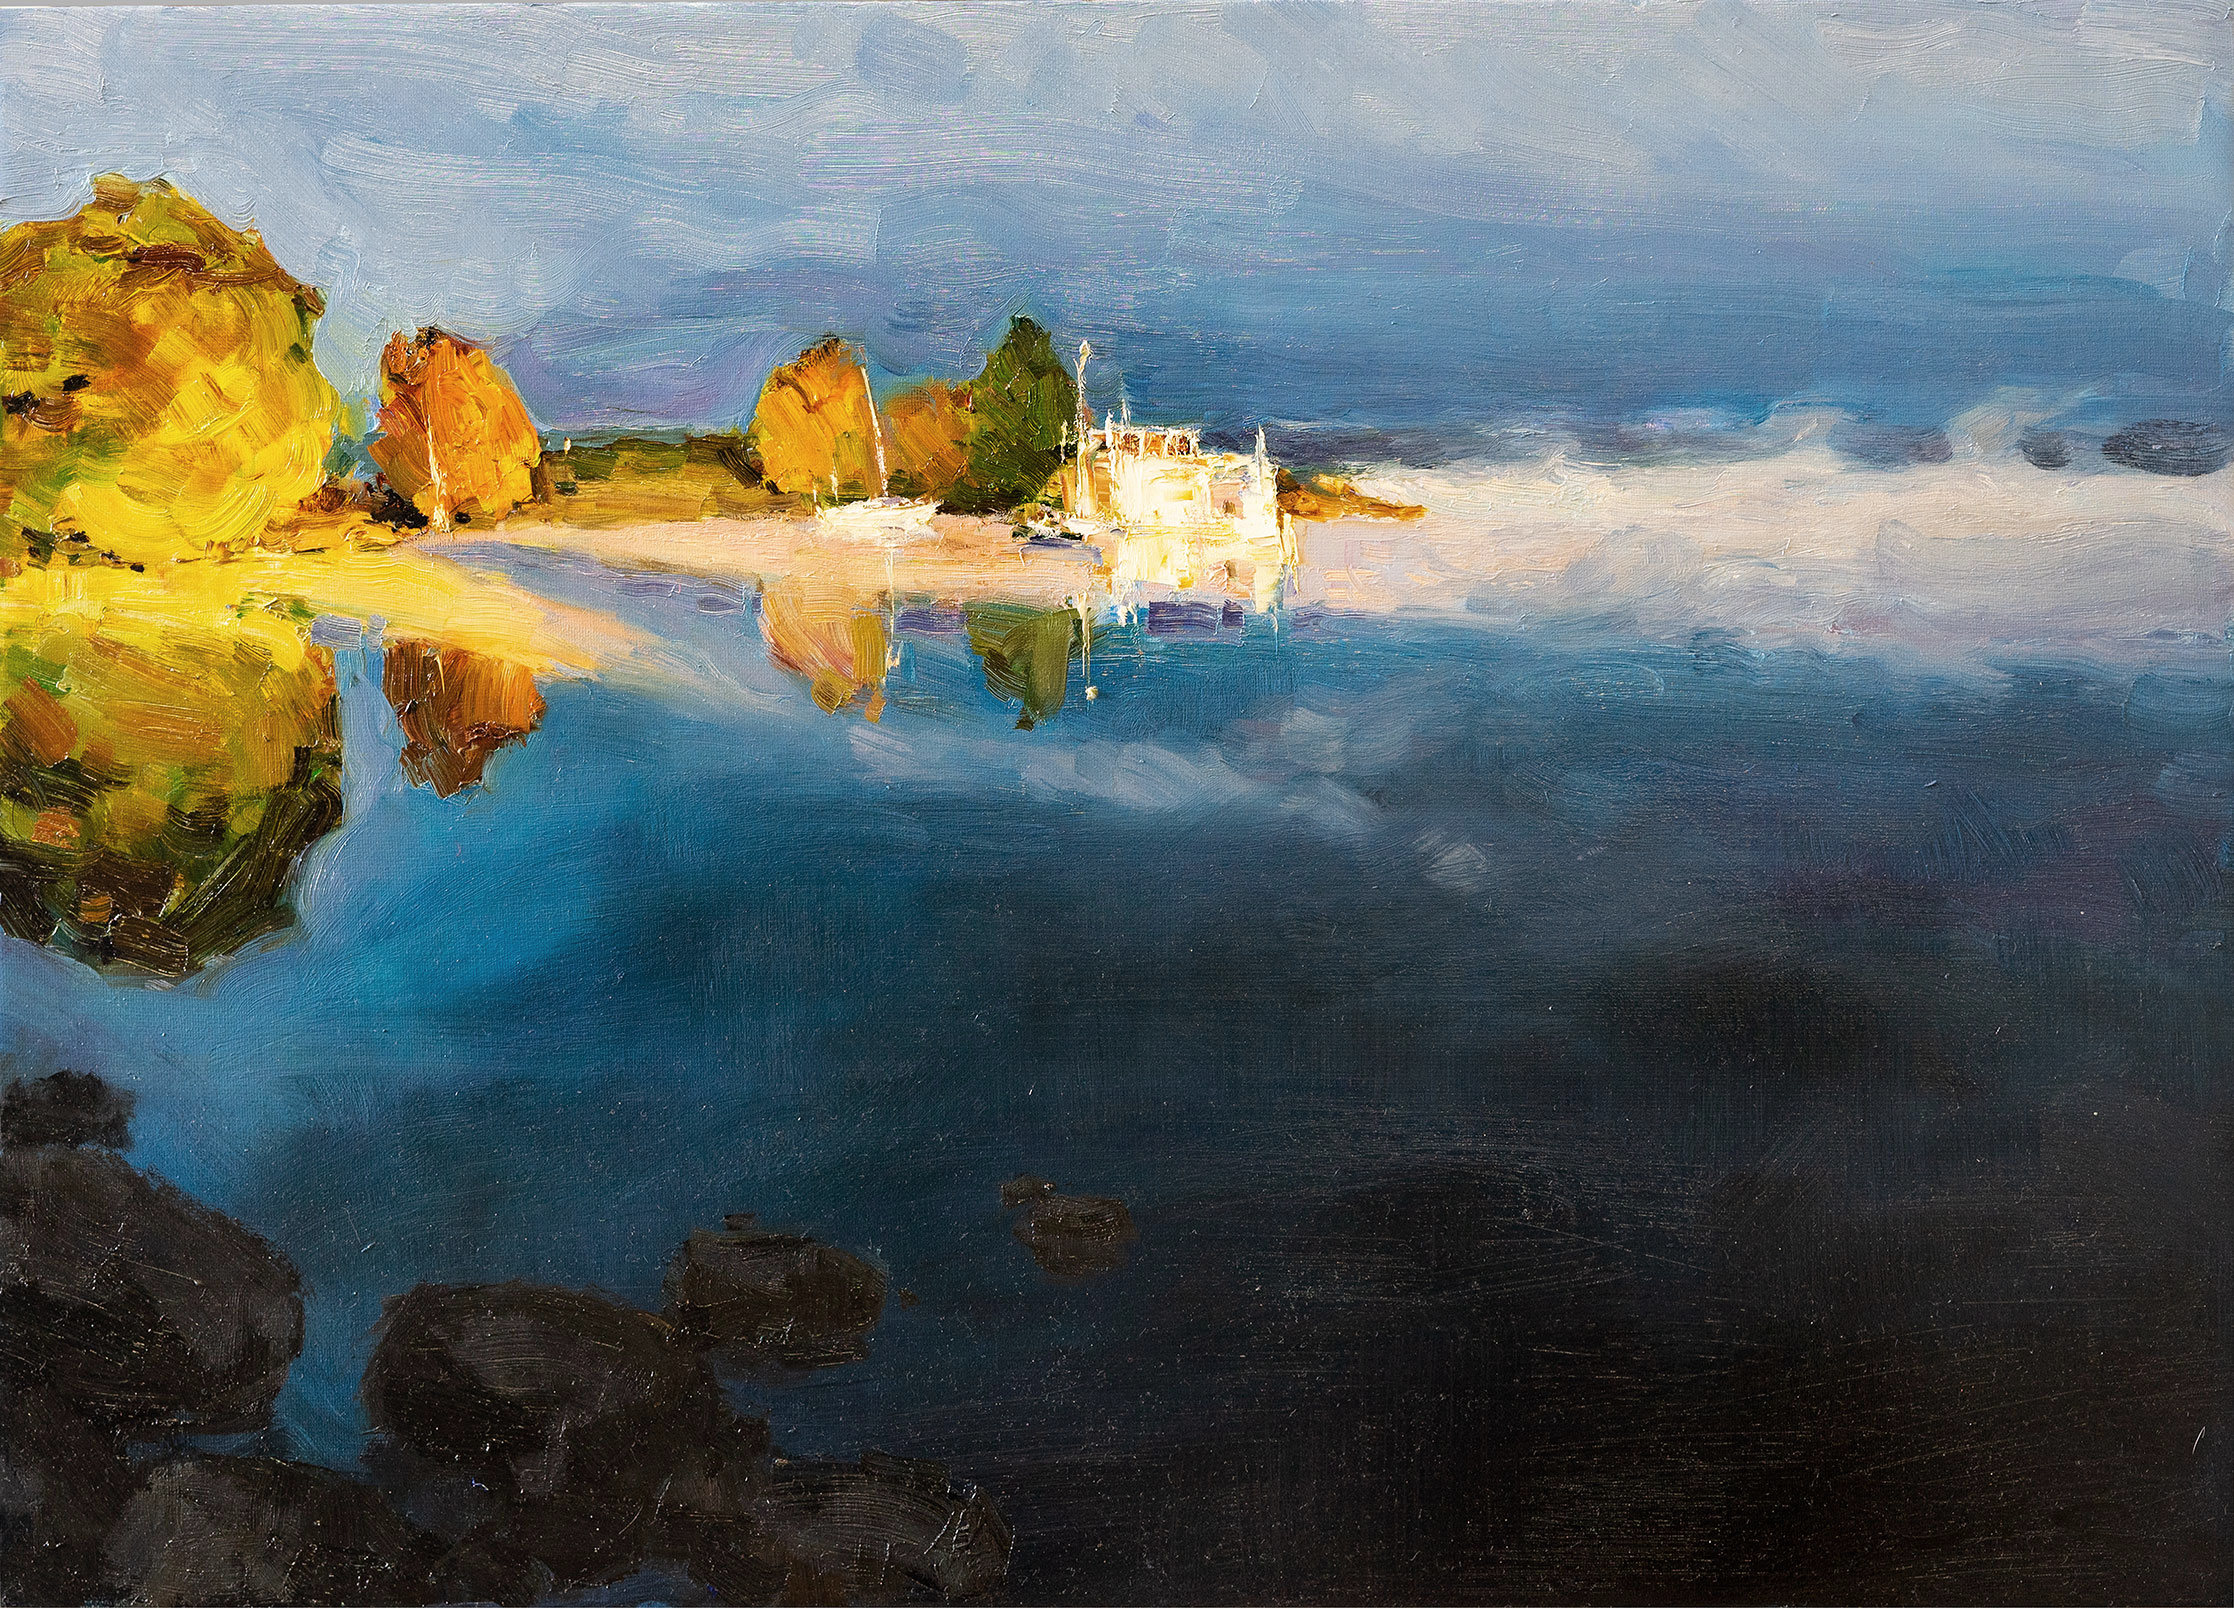 Sunrise on Shartash - 1, Sergei Prokhorov, Buy the painting Oil